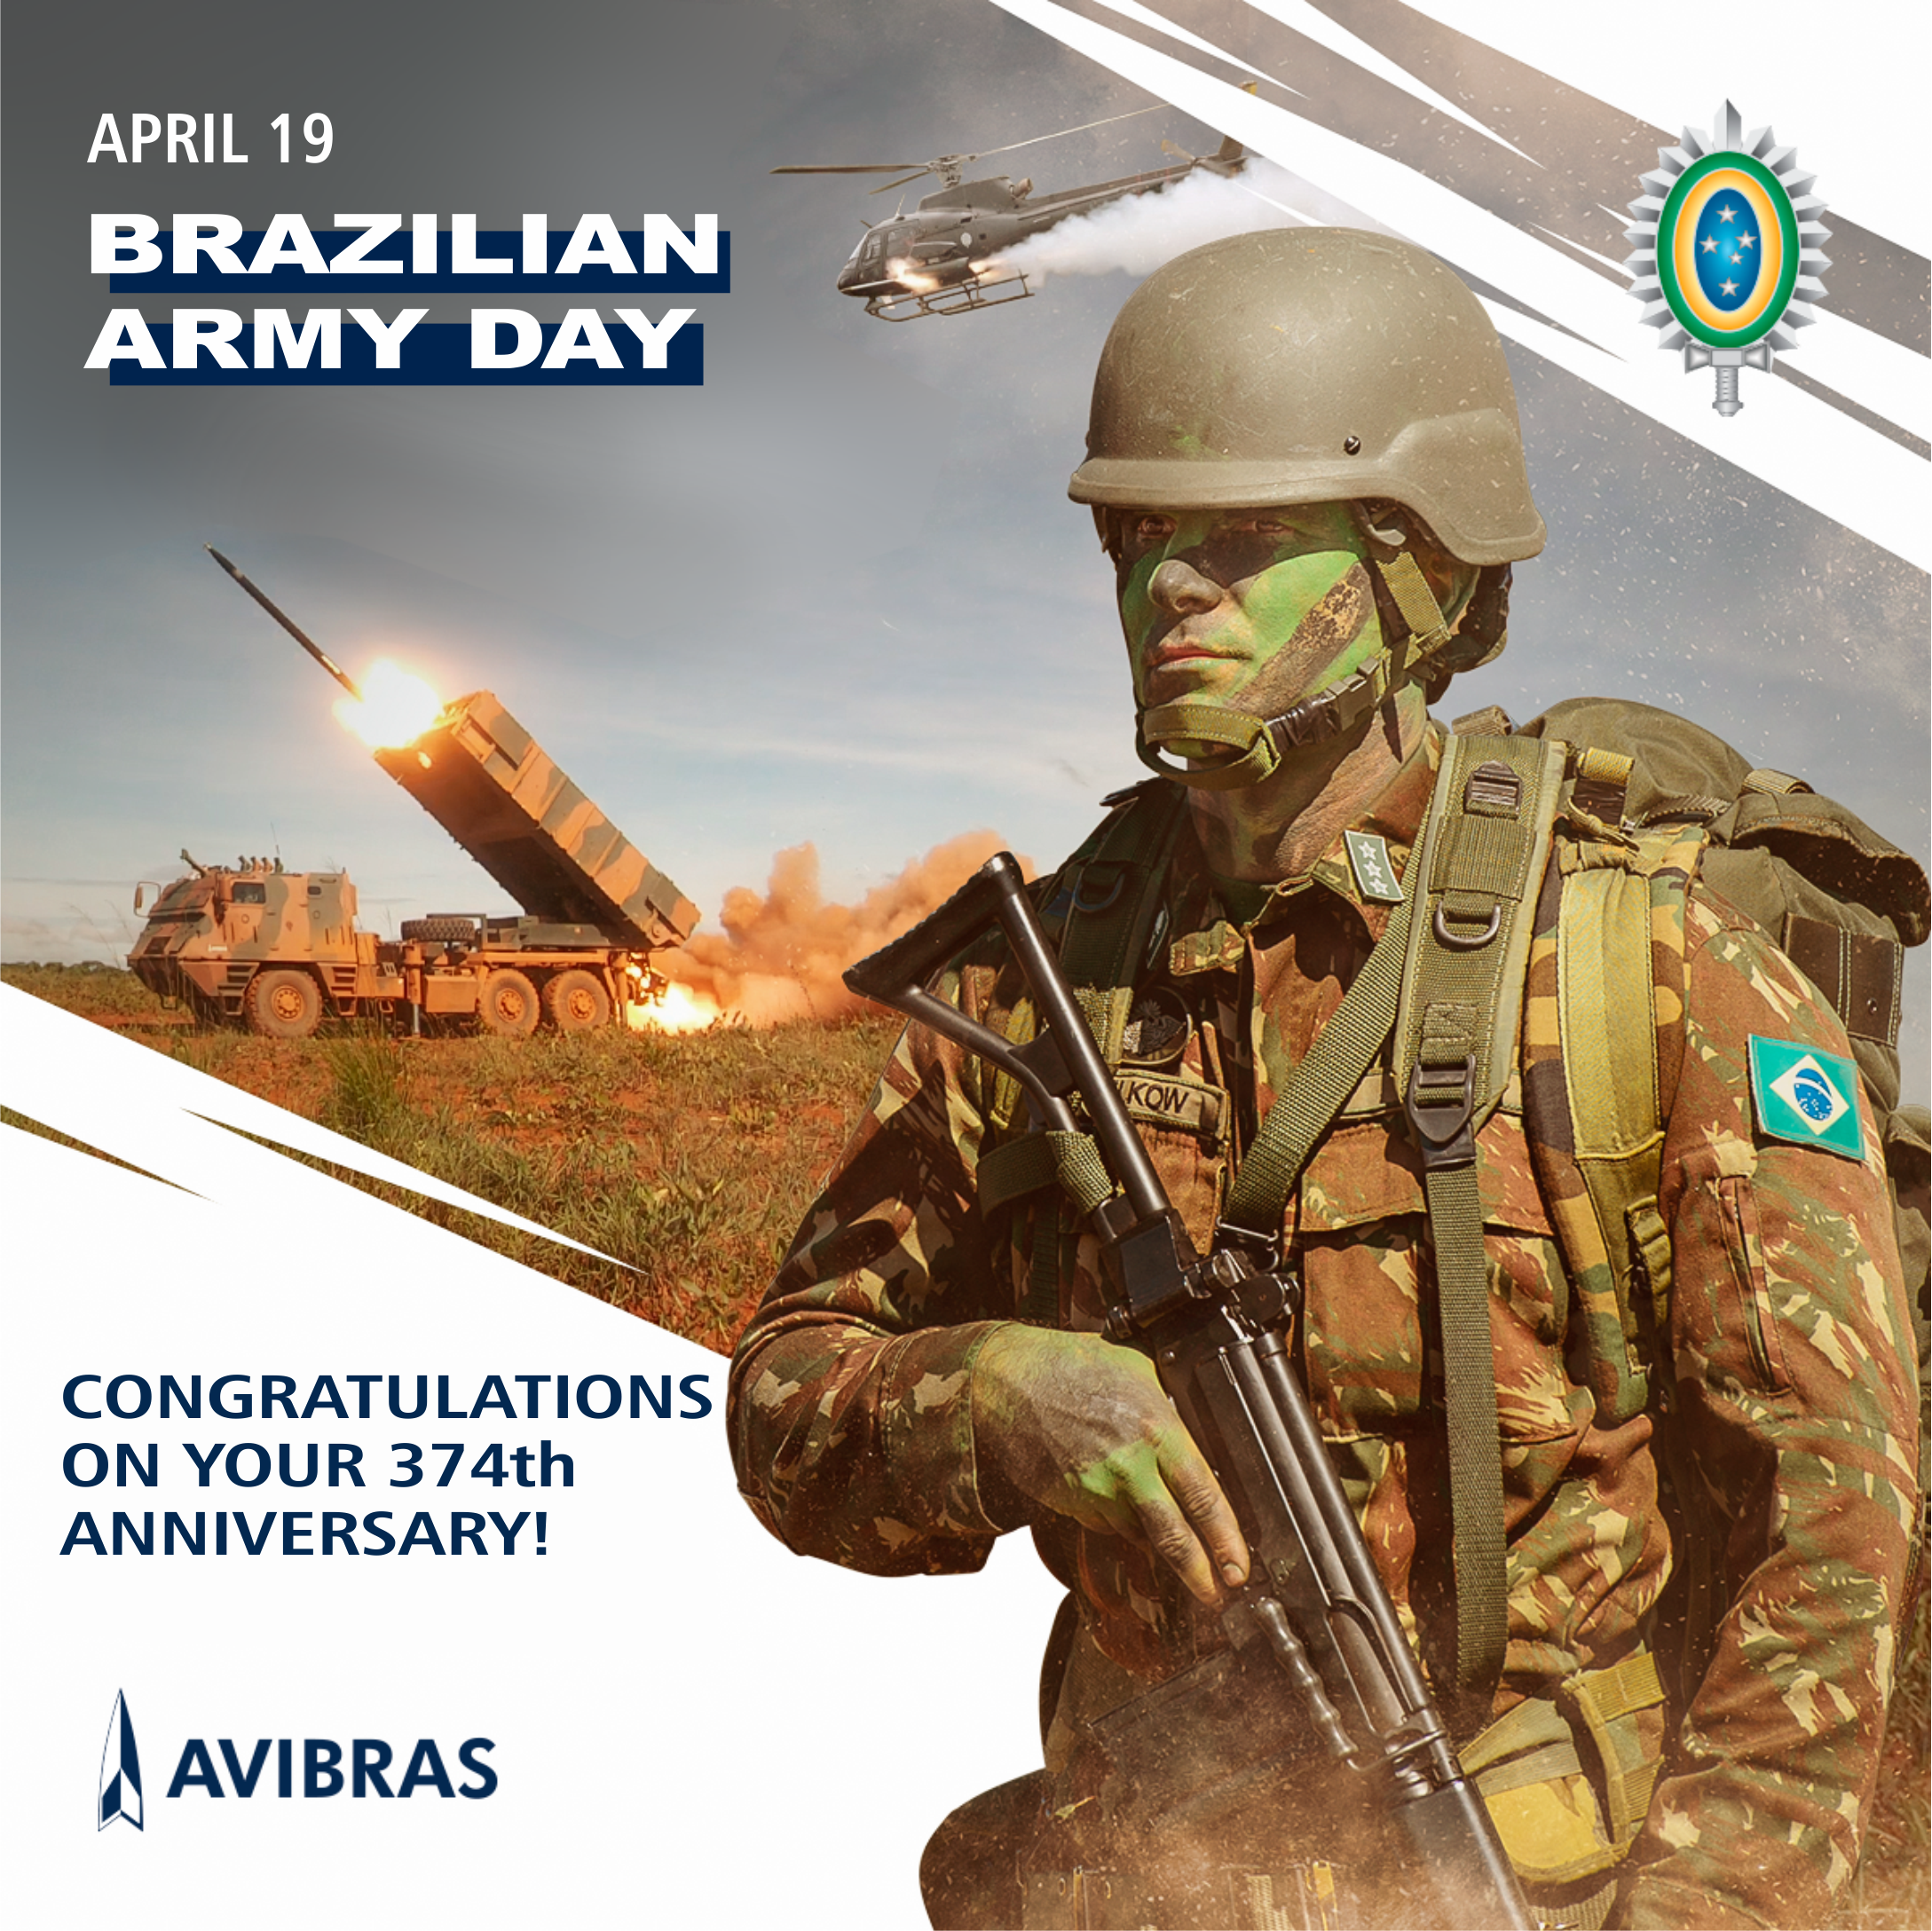 Avibras’ tribute to the Brazilian Army Day 